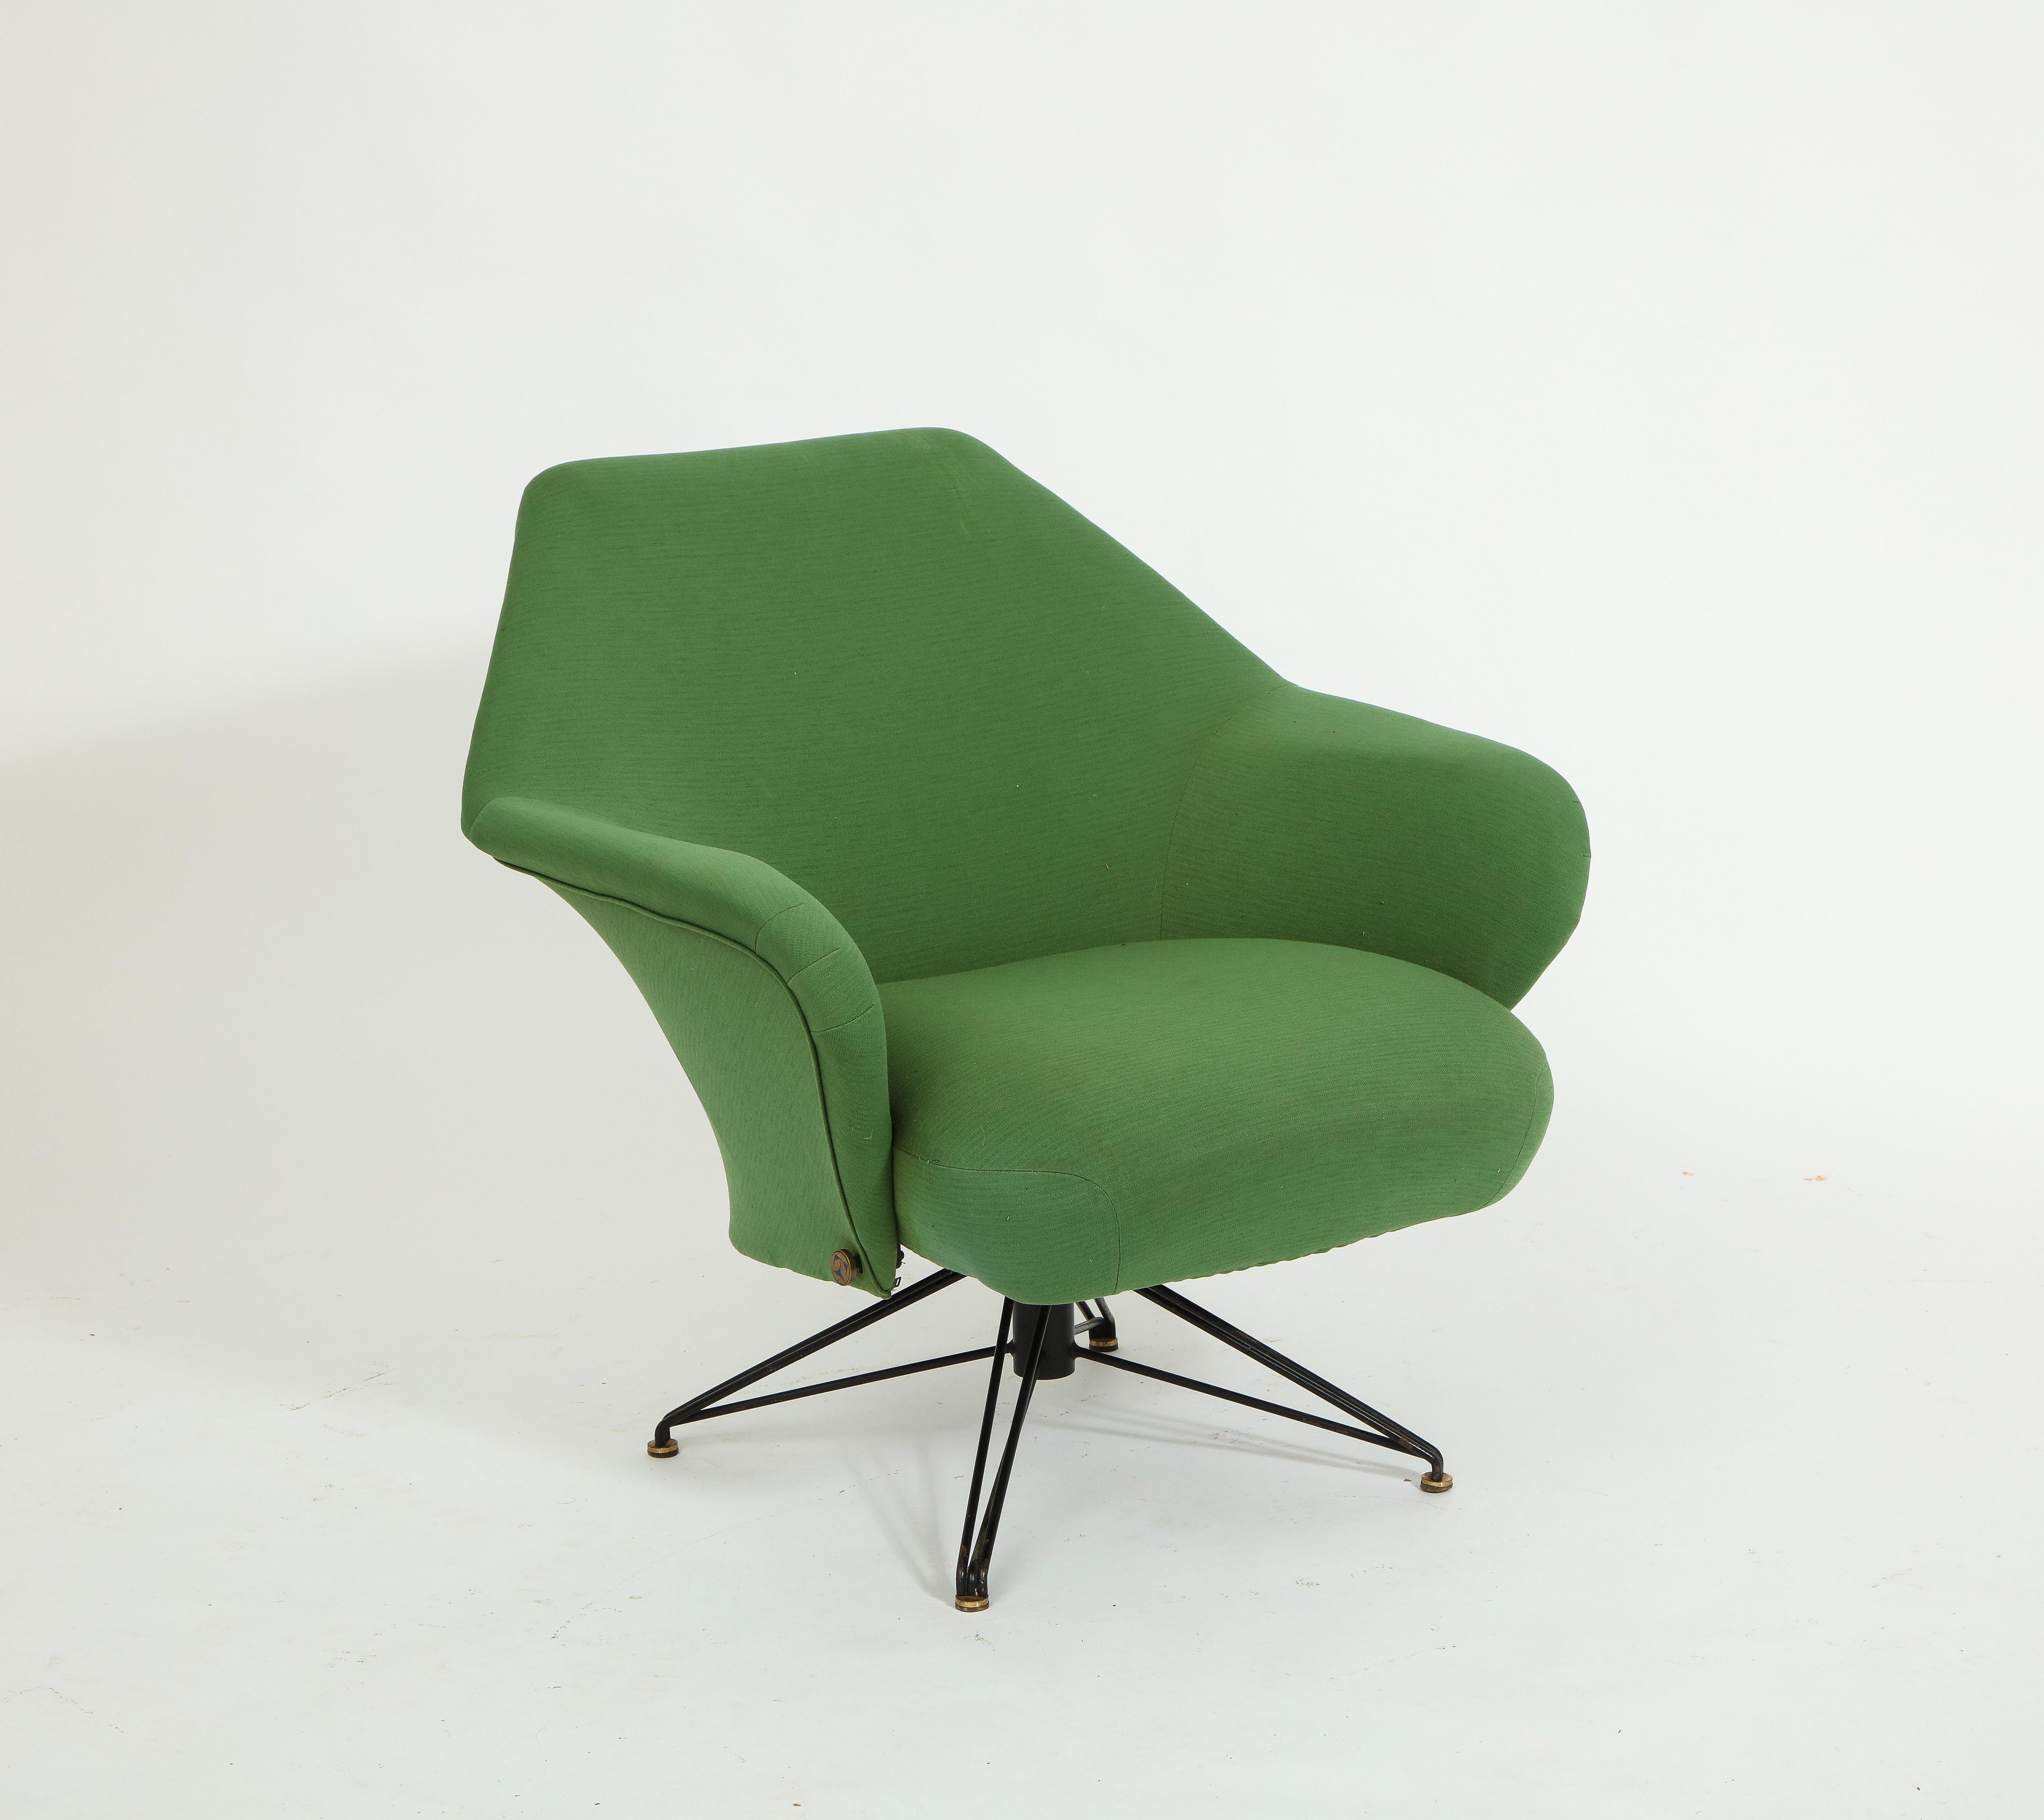 Brass Osvaldo Borsani Pair of Green P32 Chairs for Tecno, Italy 1950s For Sale